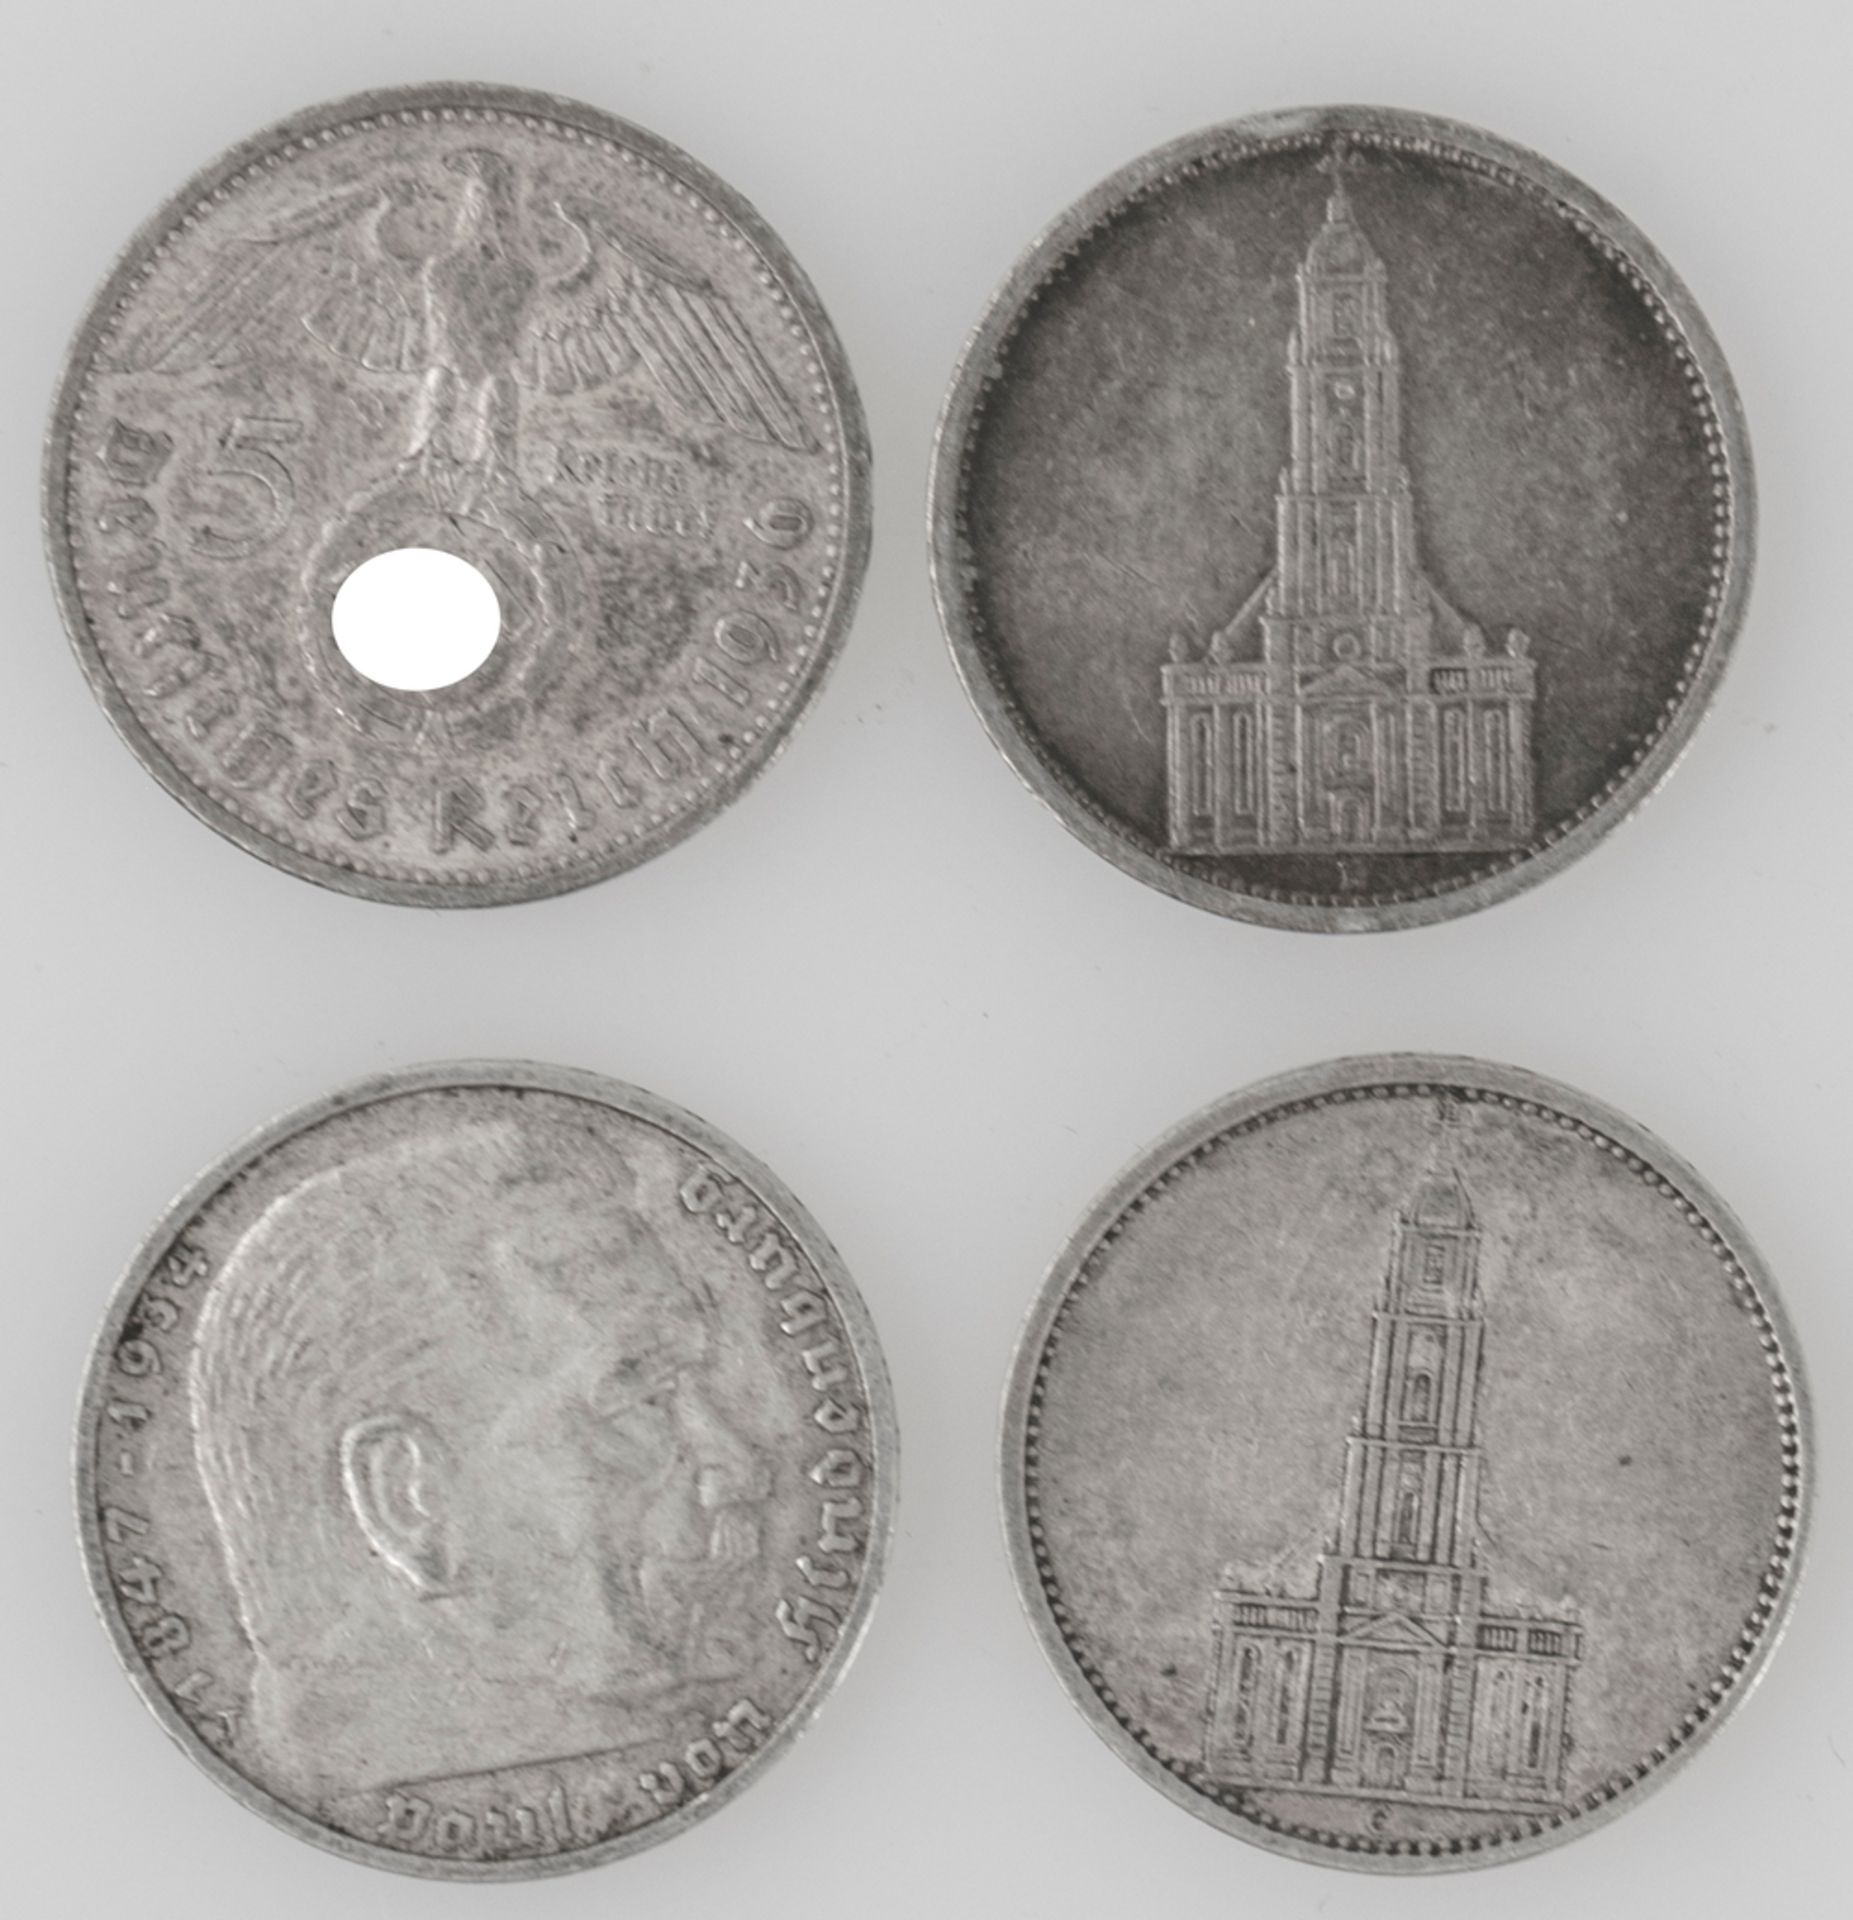 Drittes Reich 1934/36, Lot 5 Reichsmark - Silbermünzen. Erhaltung: ss.